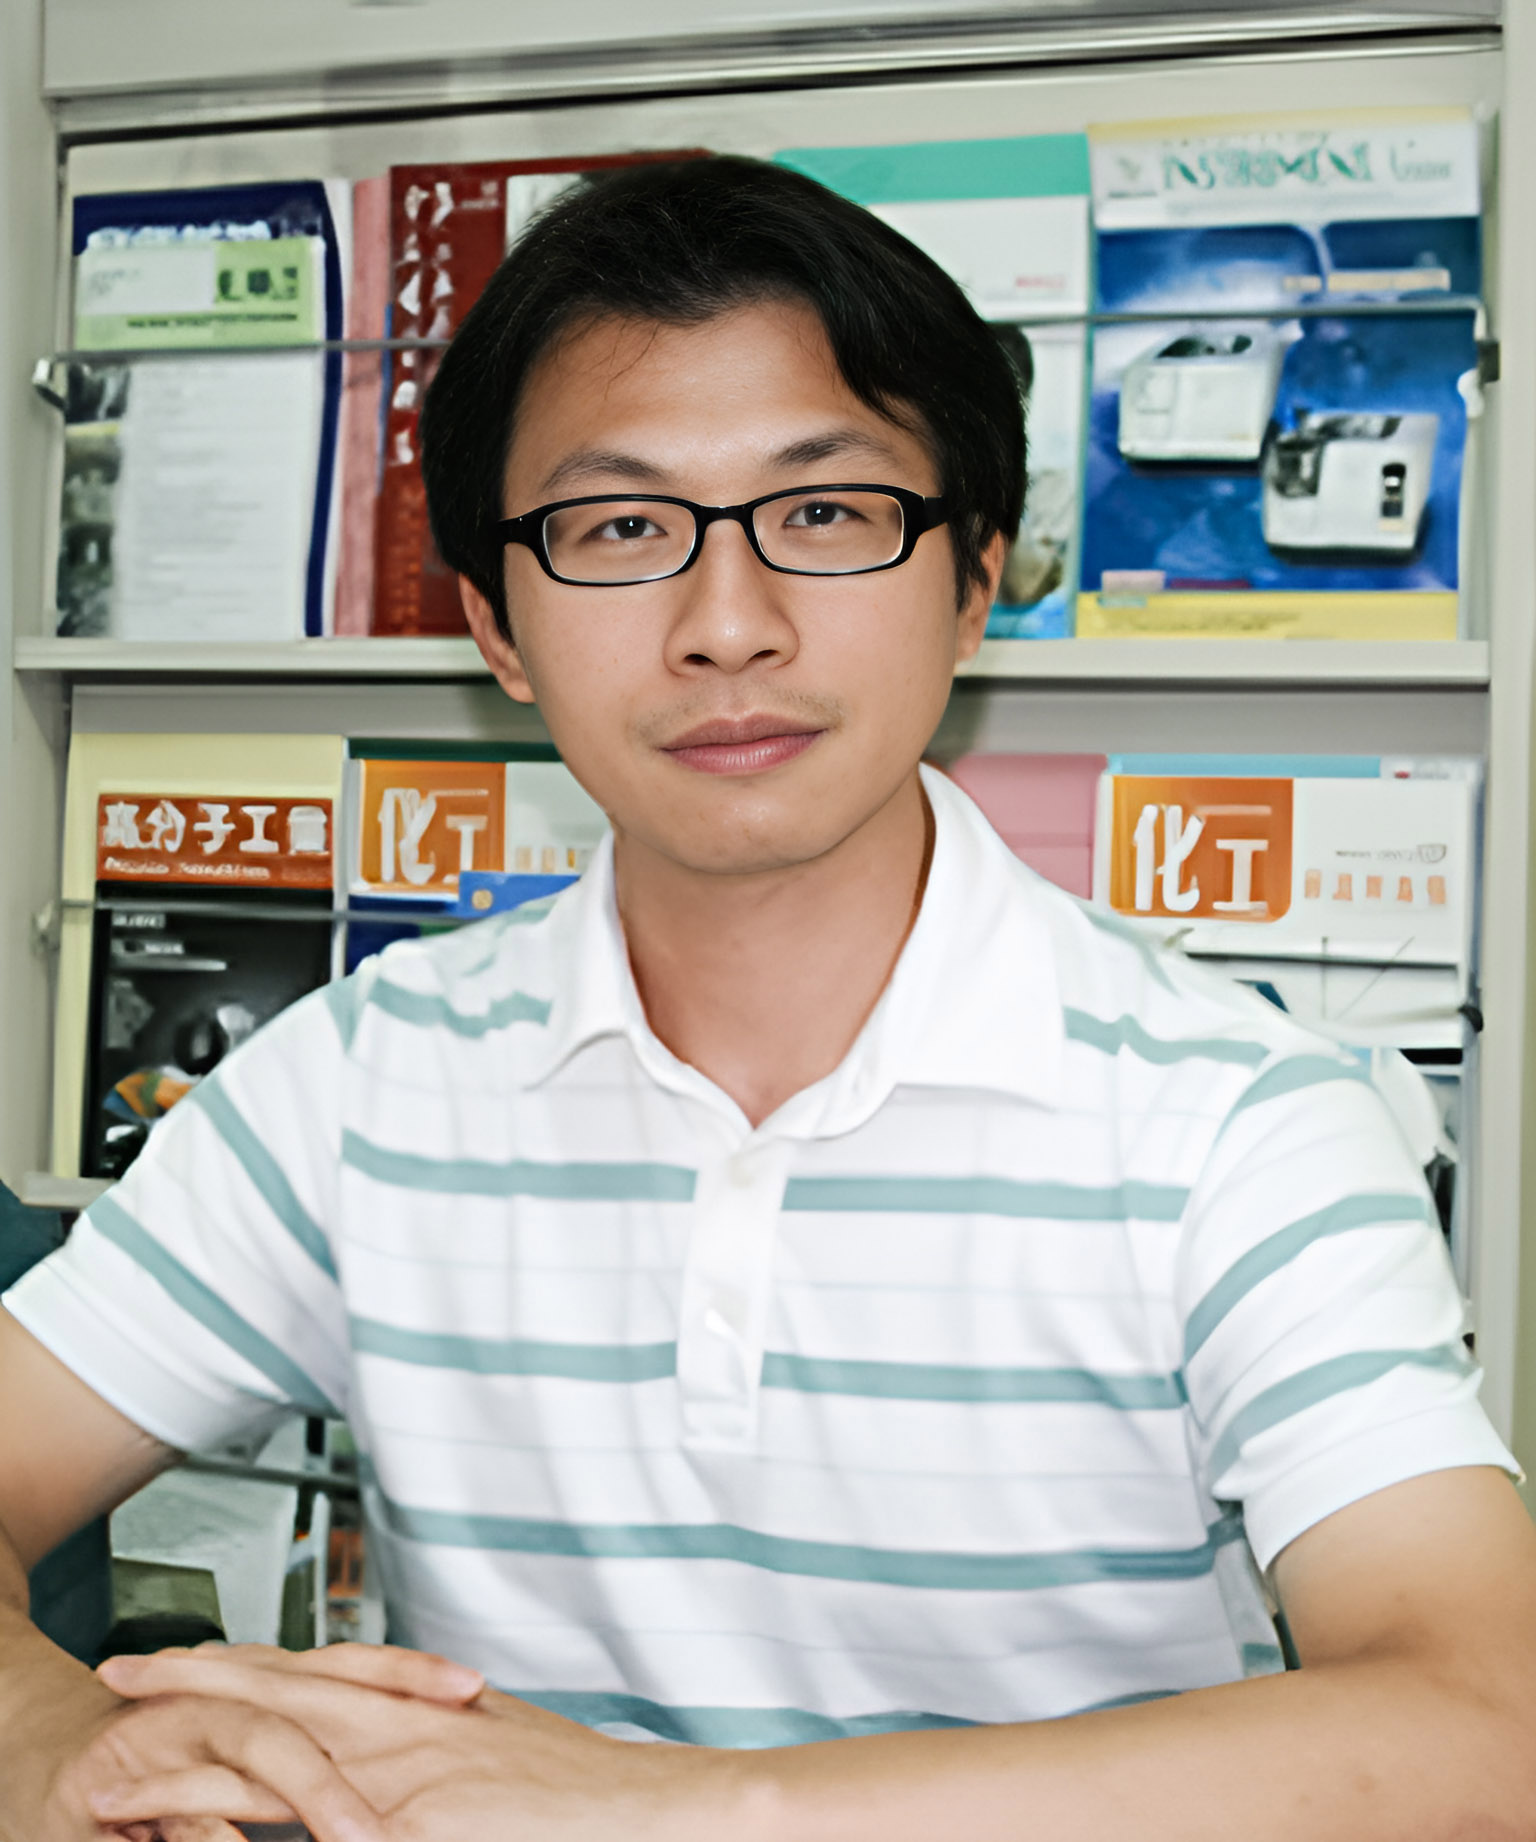 Prof. Chia-Wen (Kevin) Wu